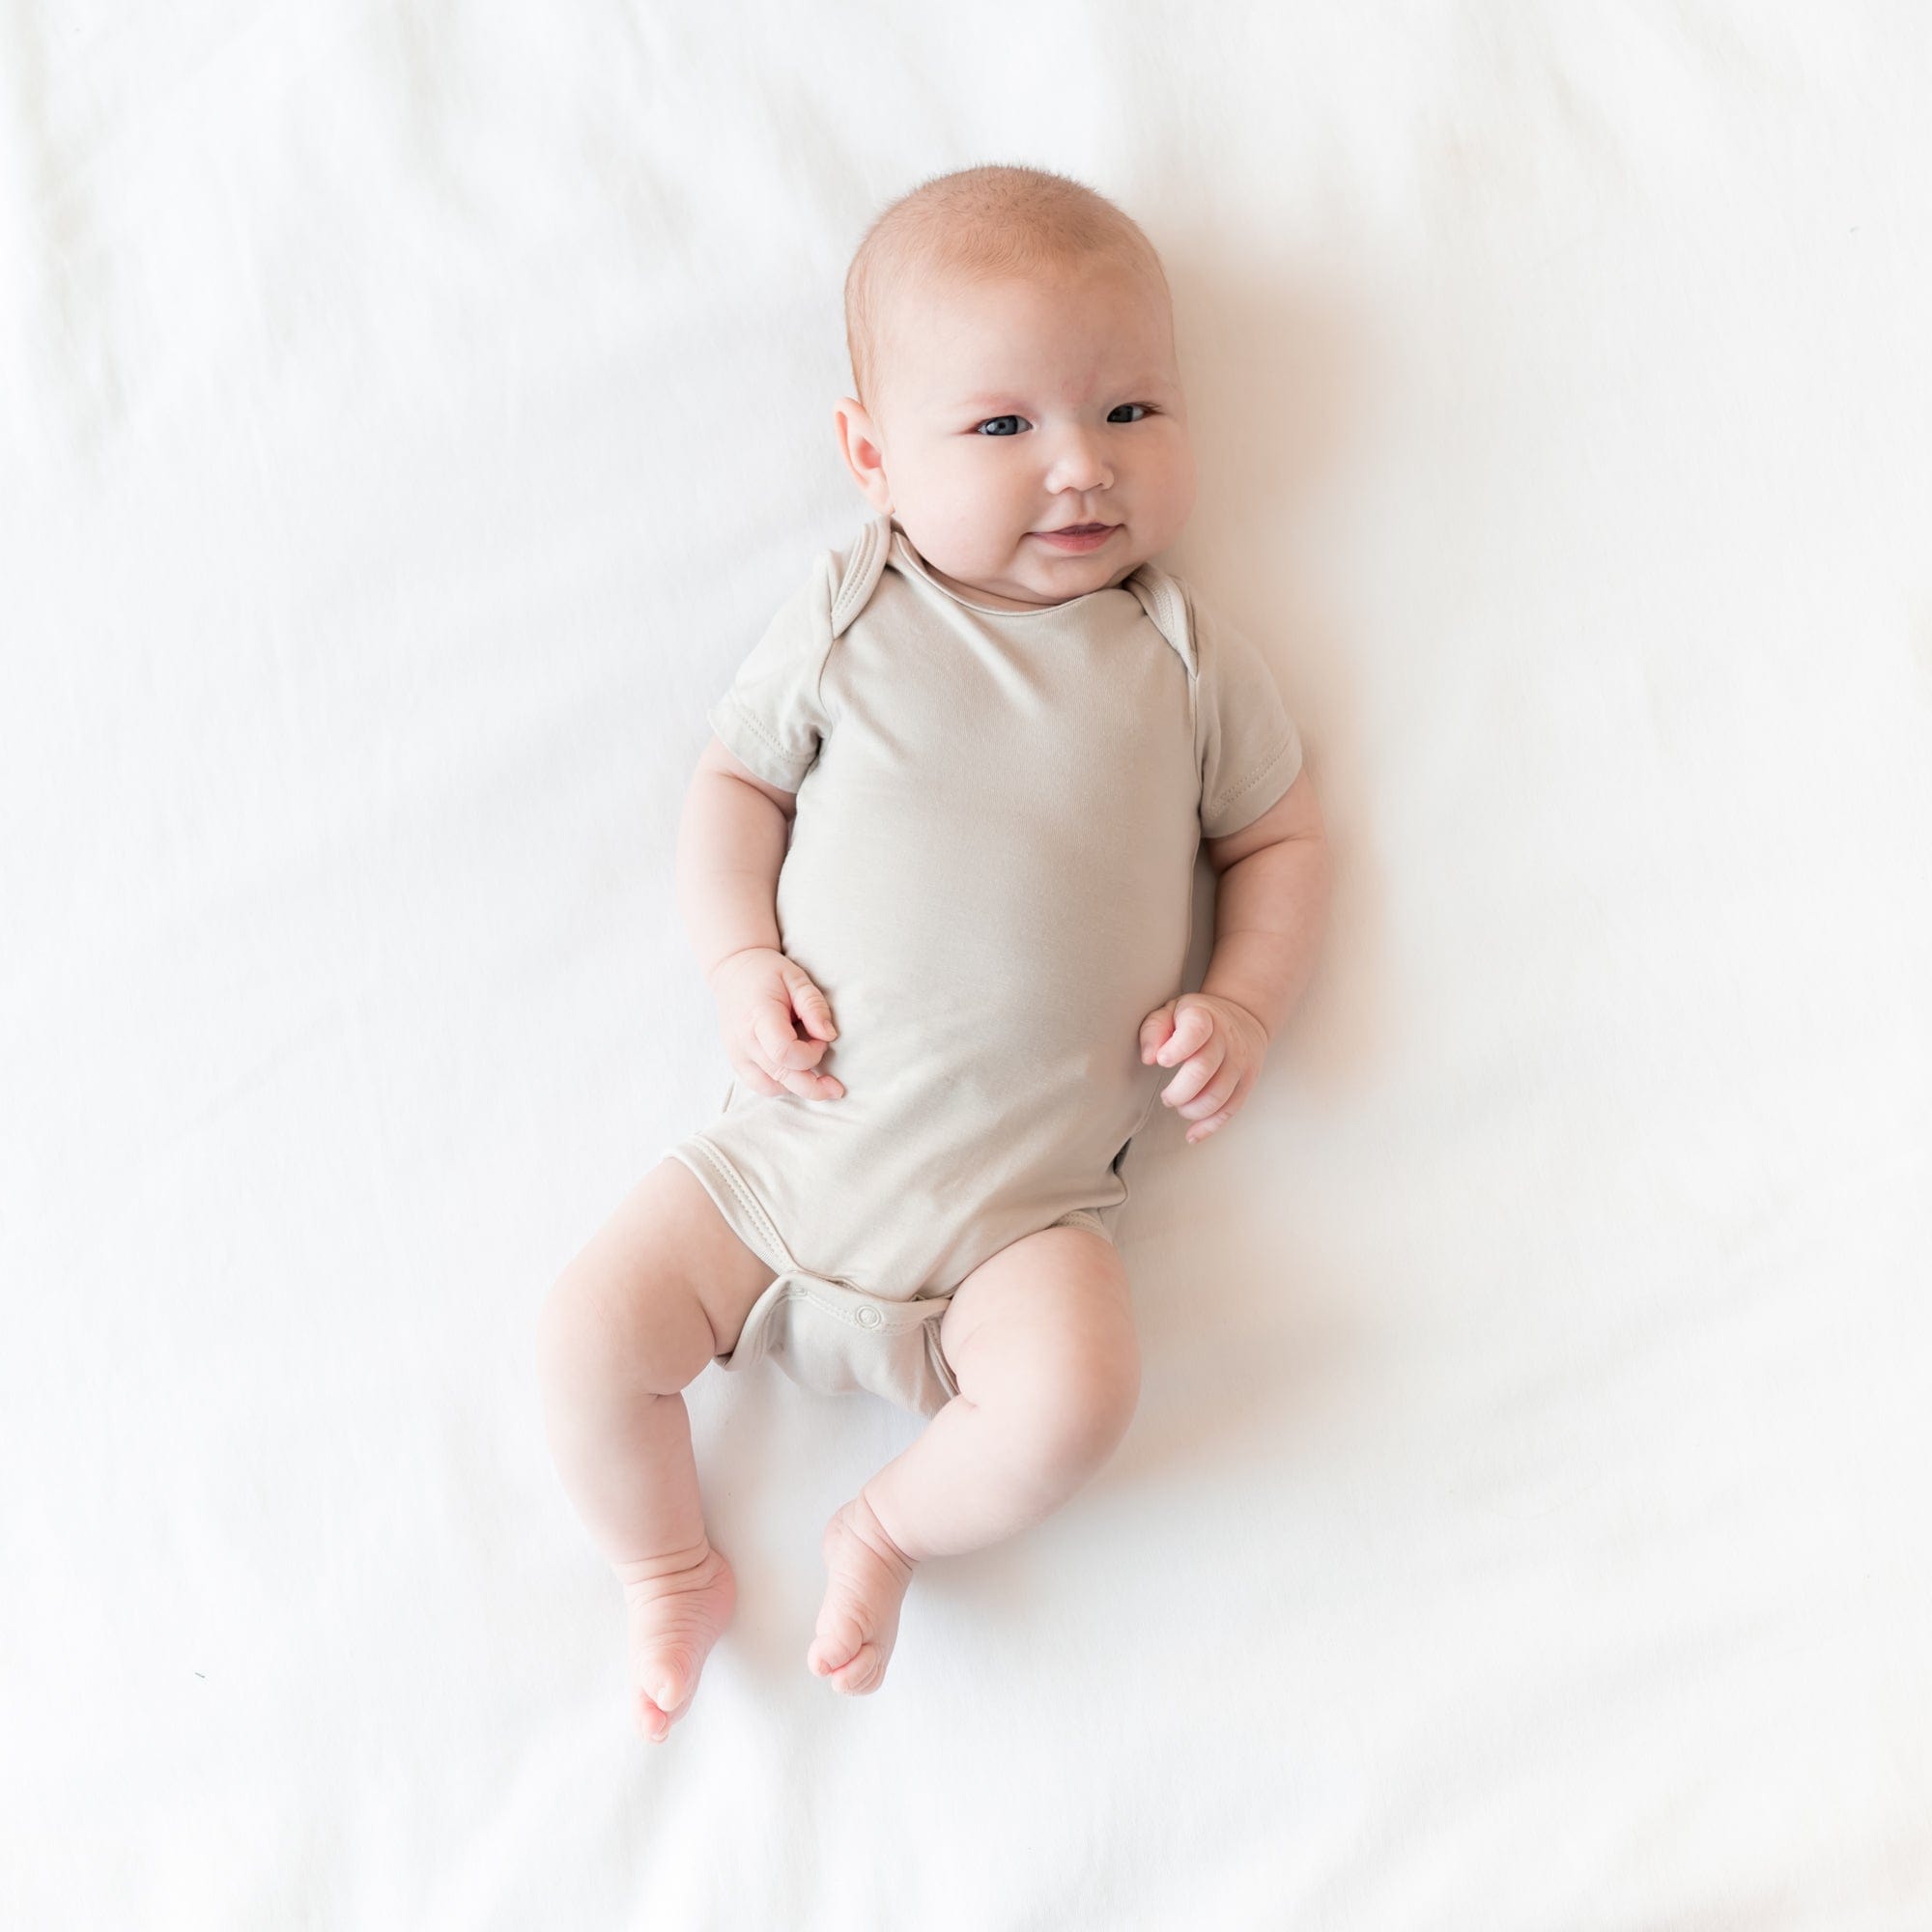 Kyte Baby - Short Sleeve Bodysuit – Little Canadian